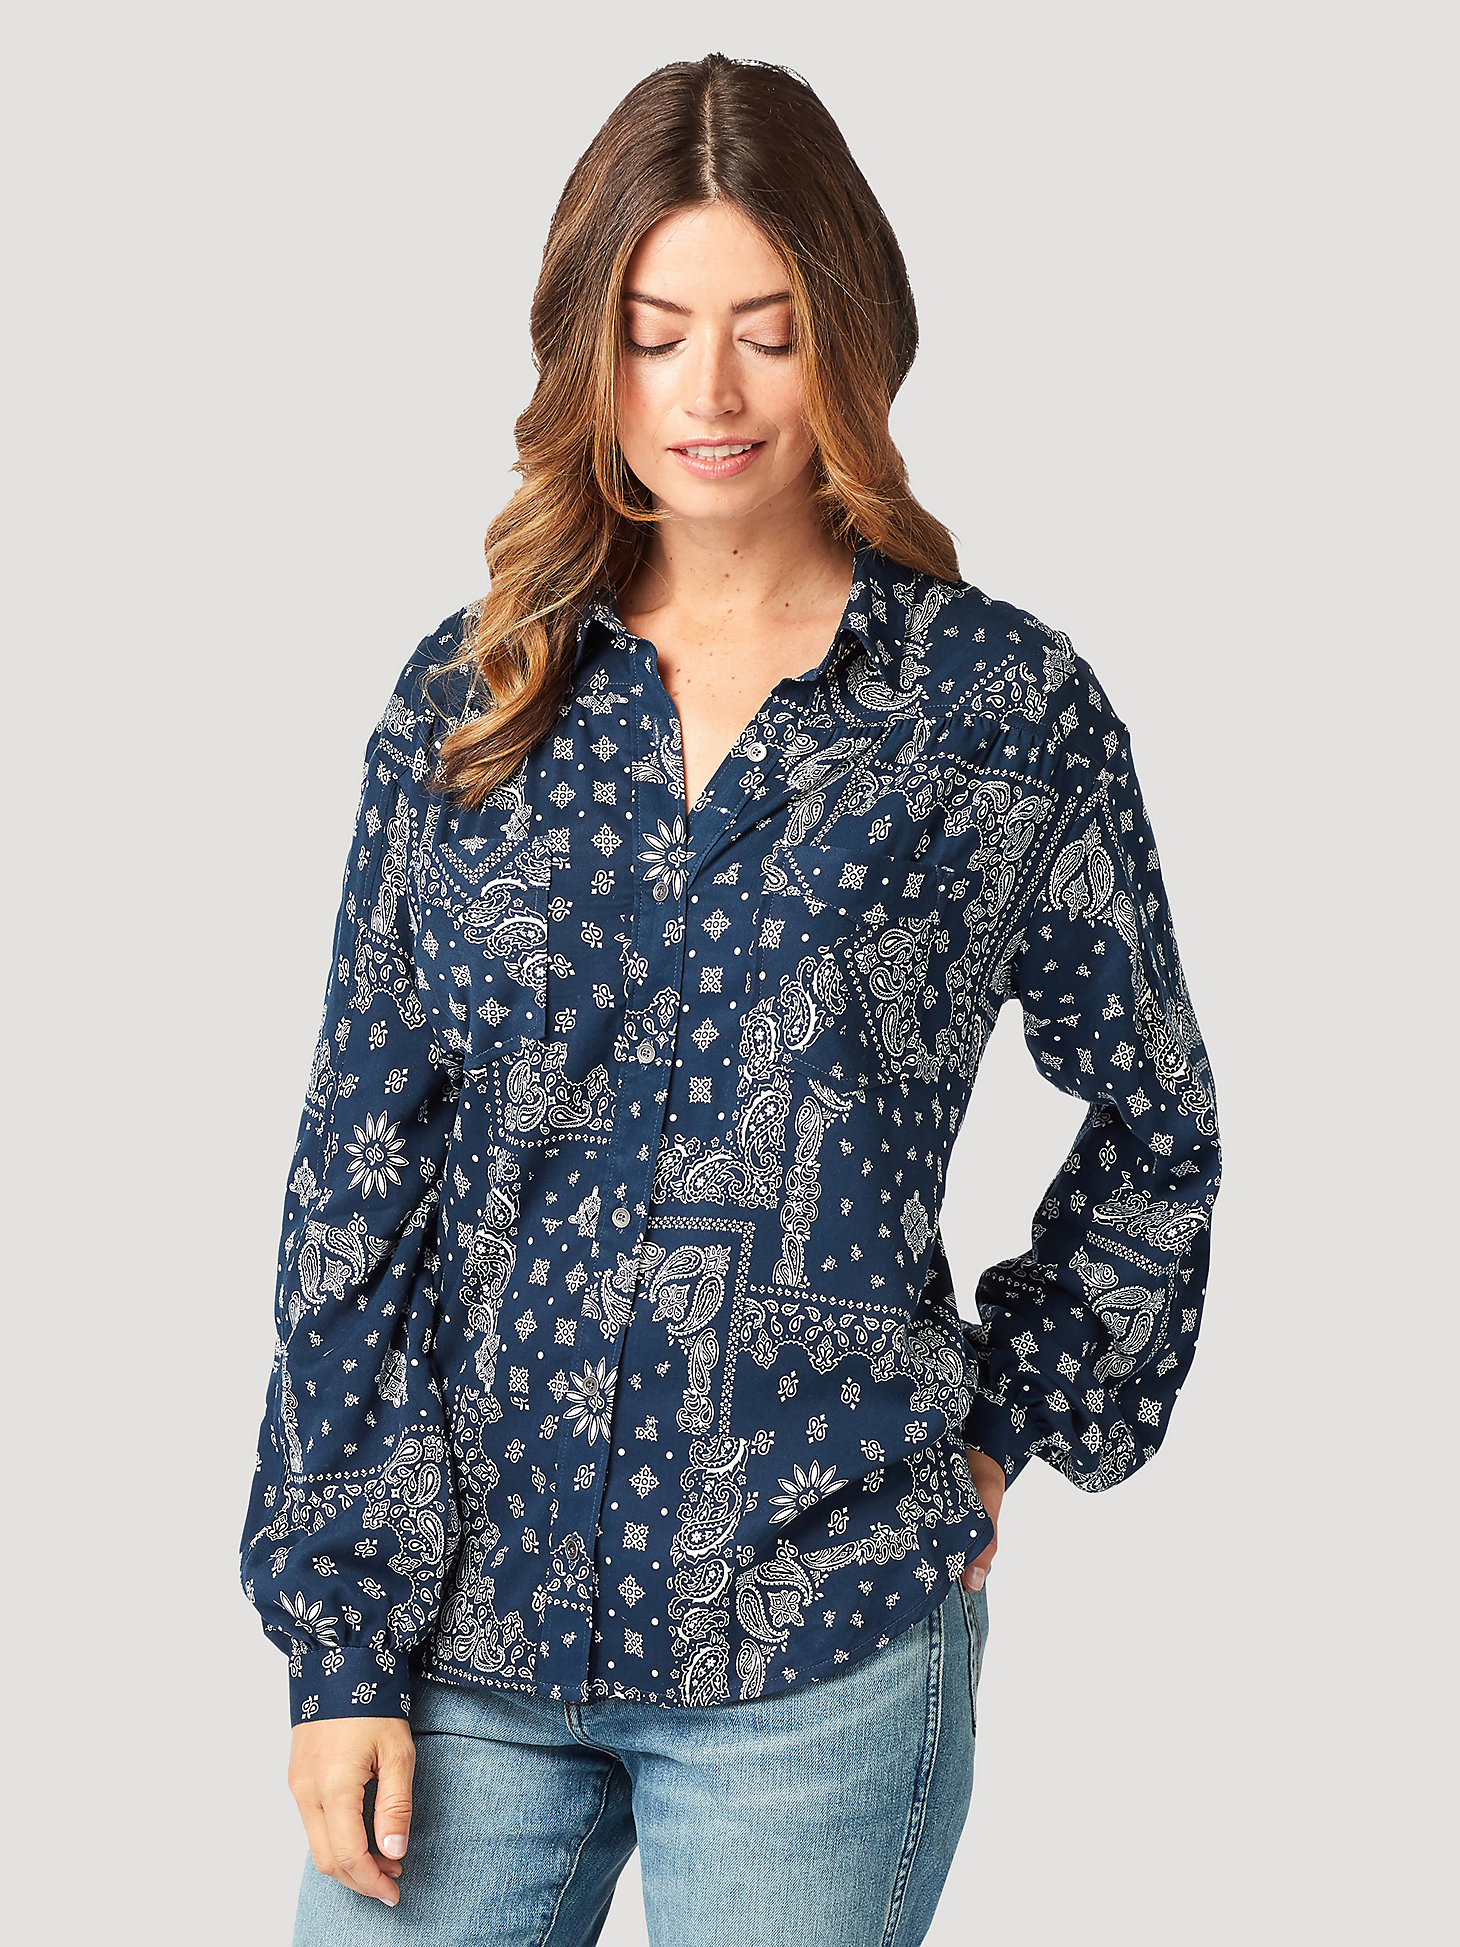 Women's Retro Patchwork Western Bloused Long Sleeve Shirt in Blueprint alternative view 1